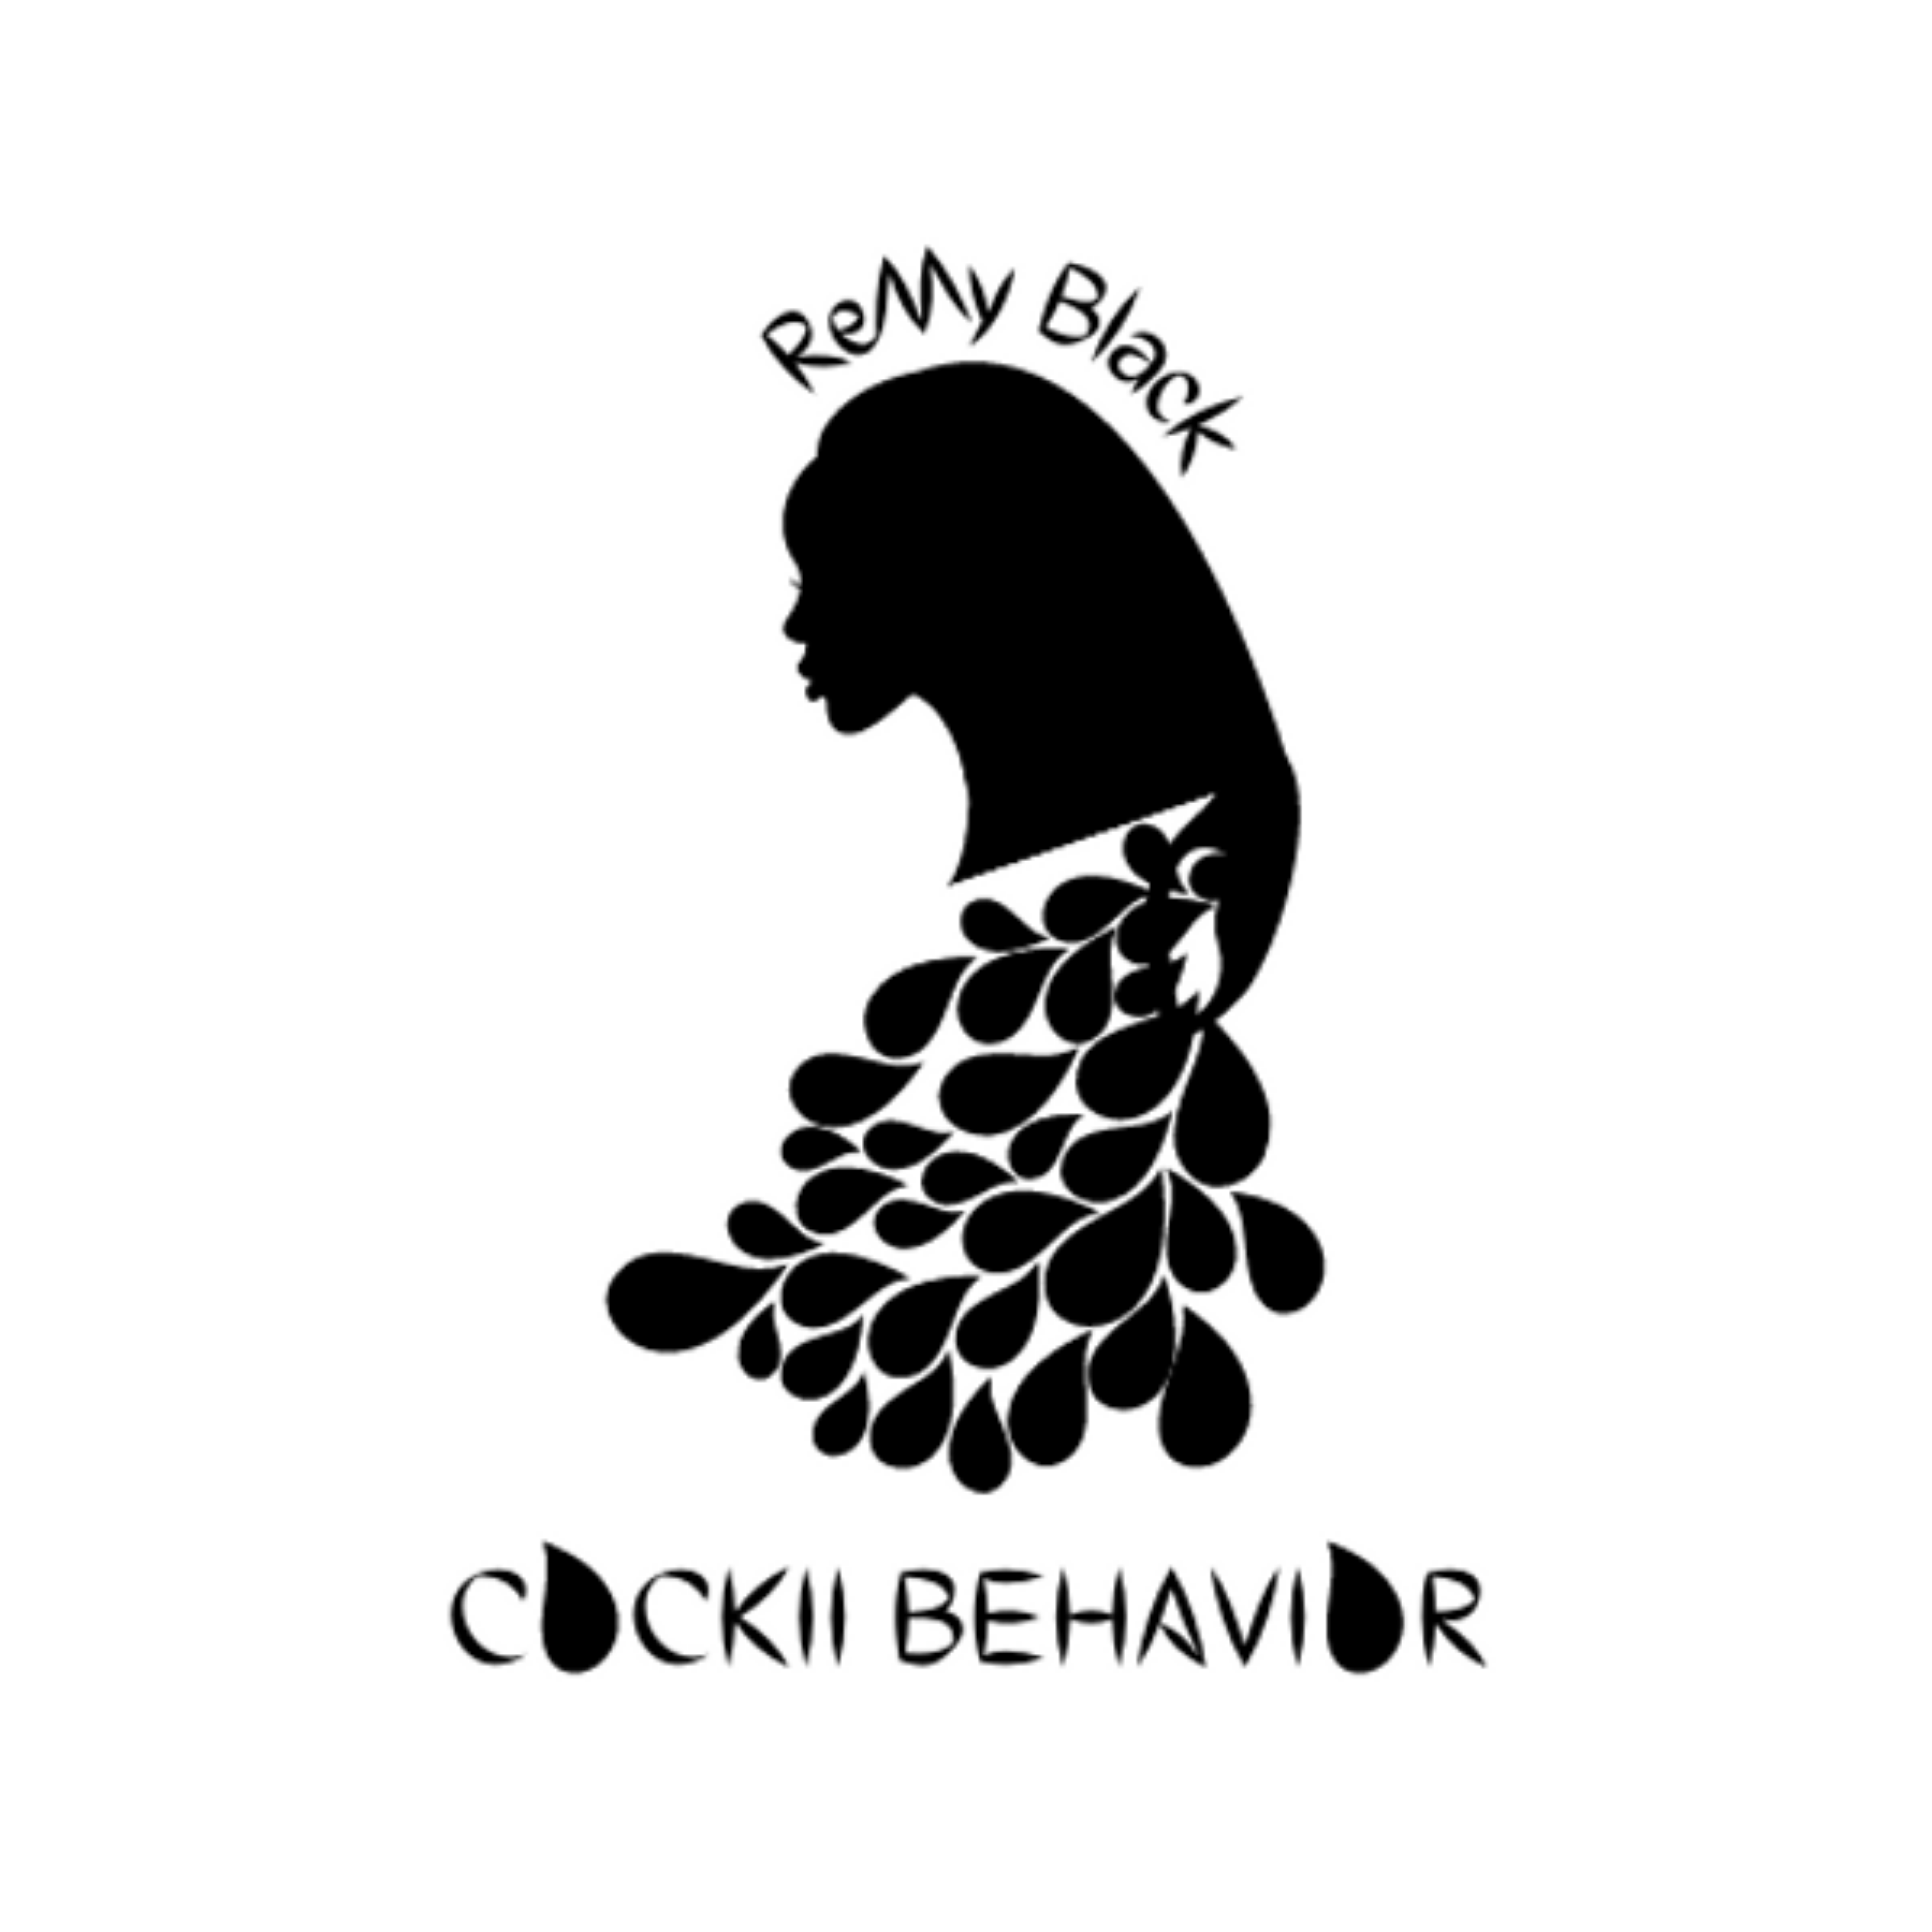 Cockii Behavior